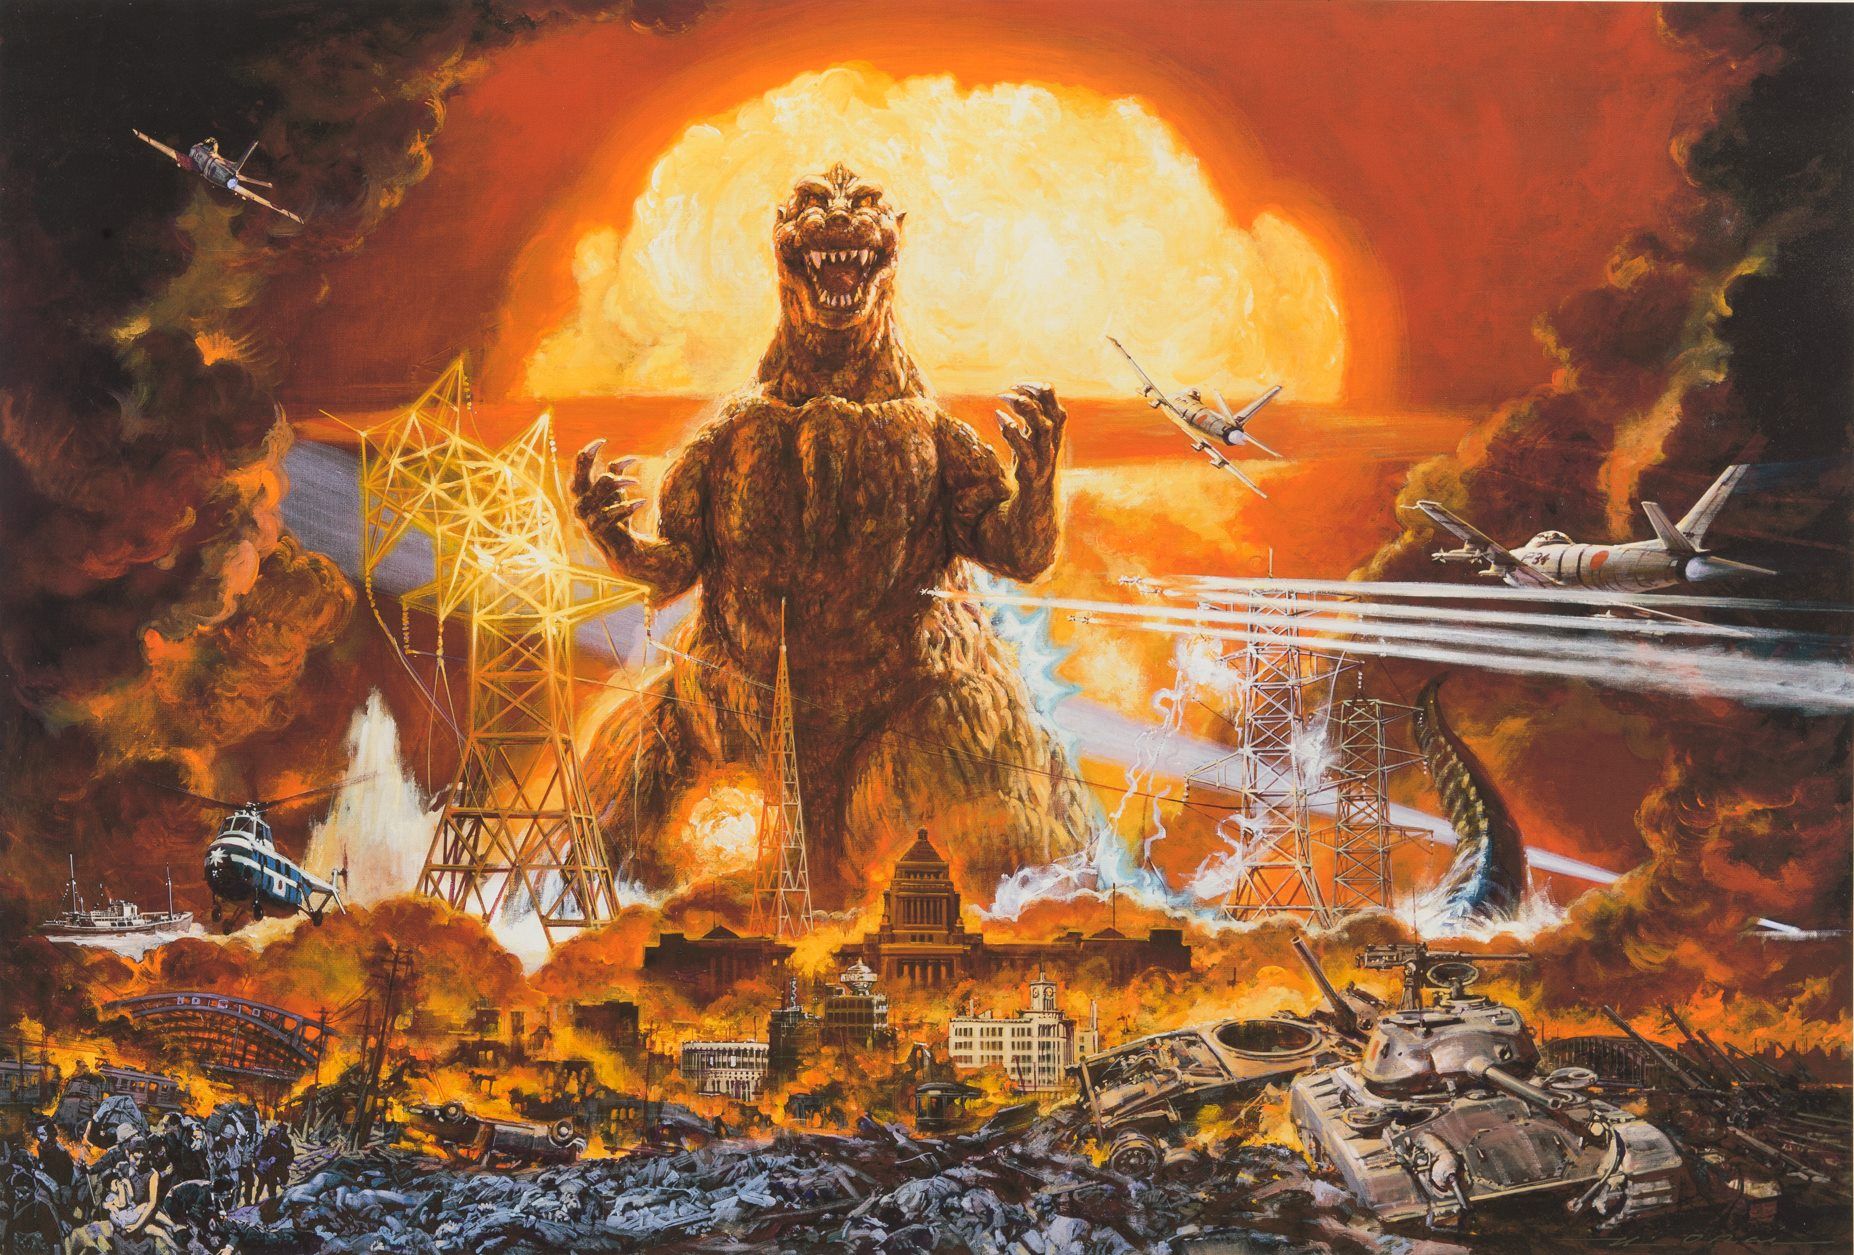 Godzilla art by Noriyoshi Ohrai: GODZILLA